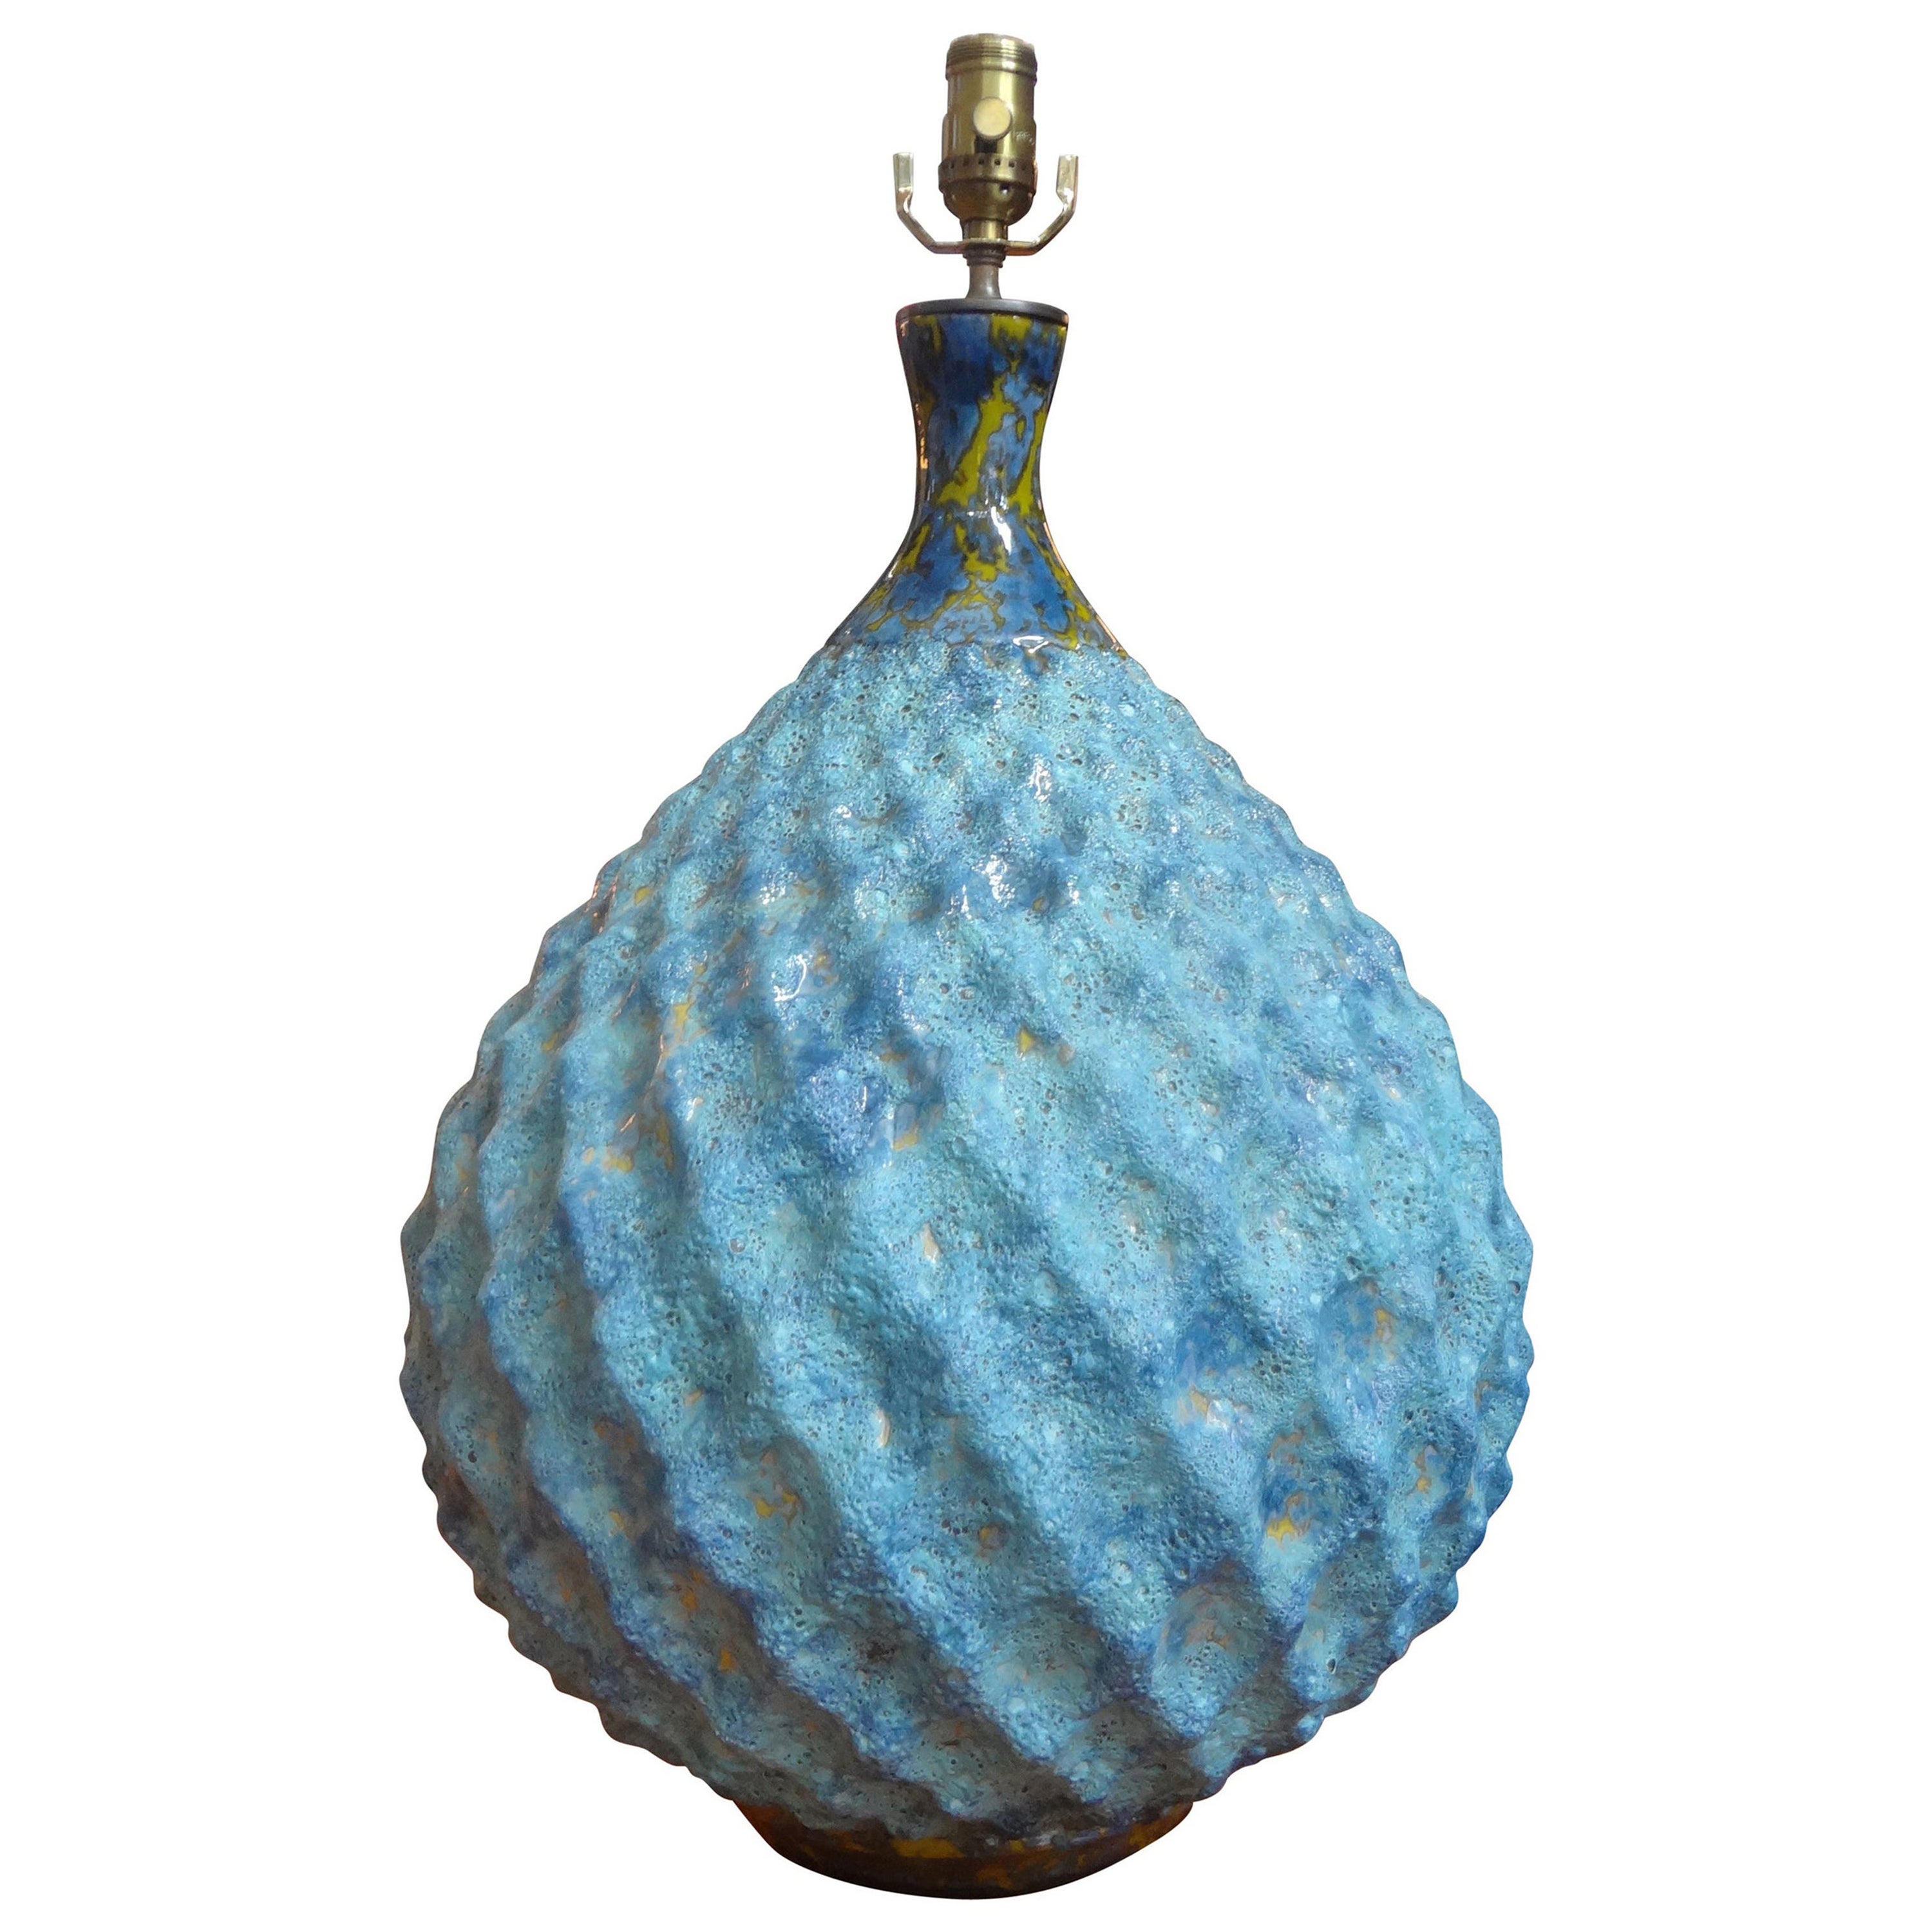 Midcentury, Glazed Pottery Artichoke Lamp For Sale